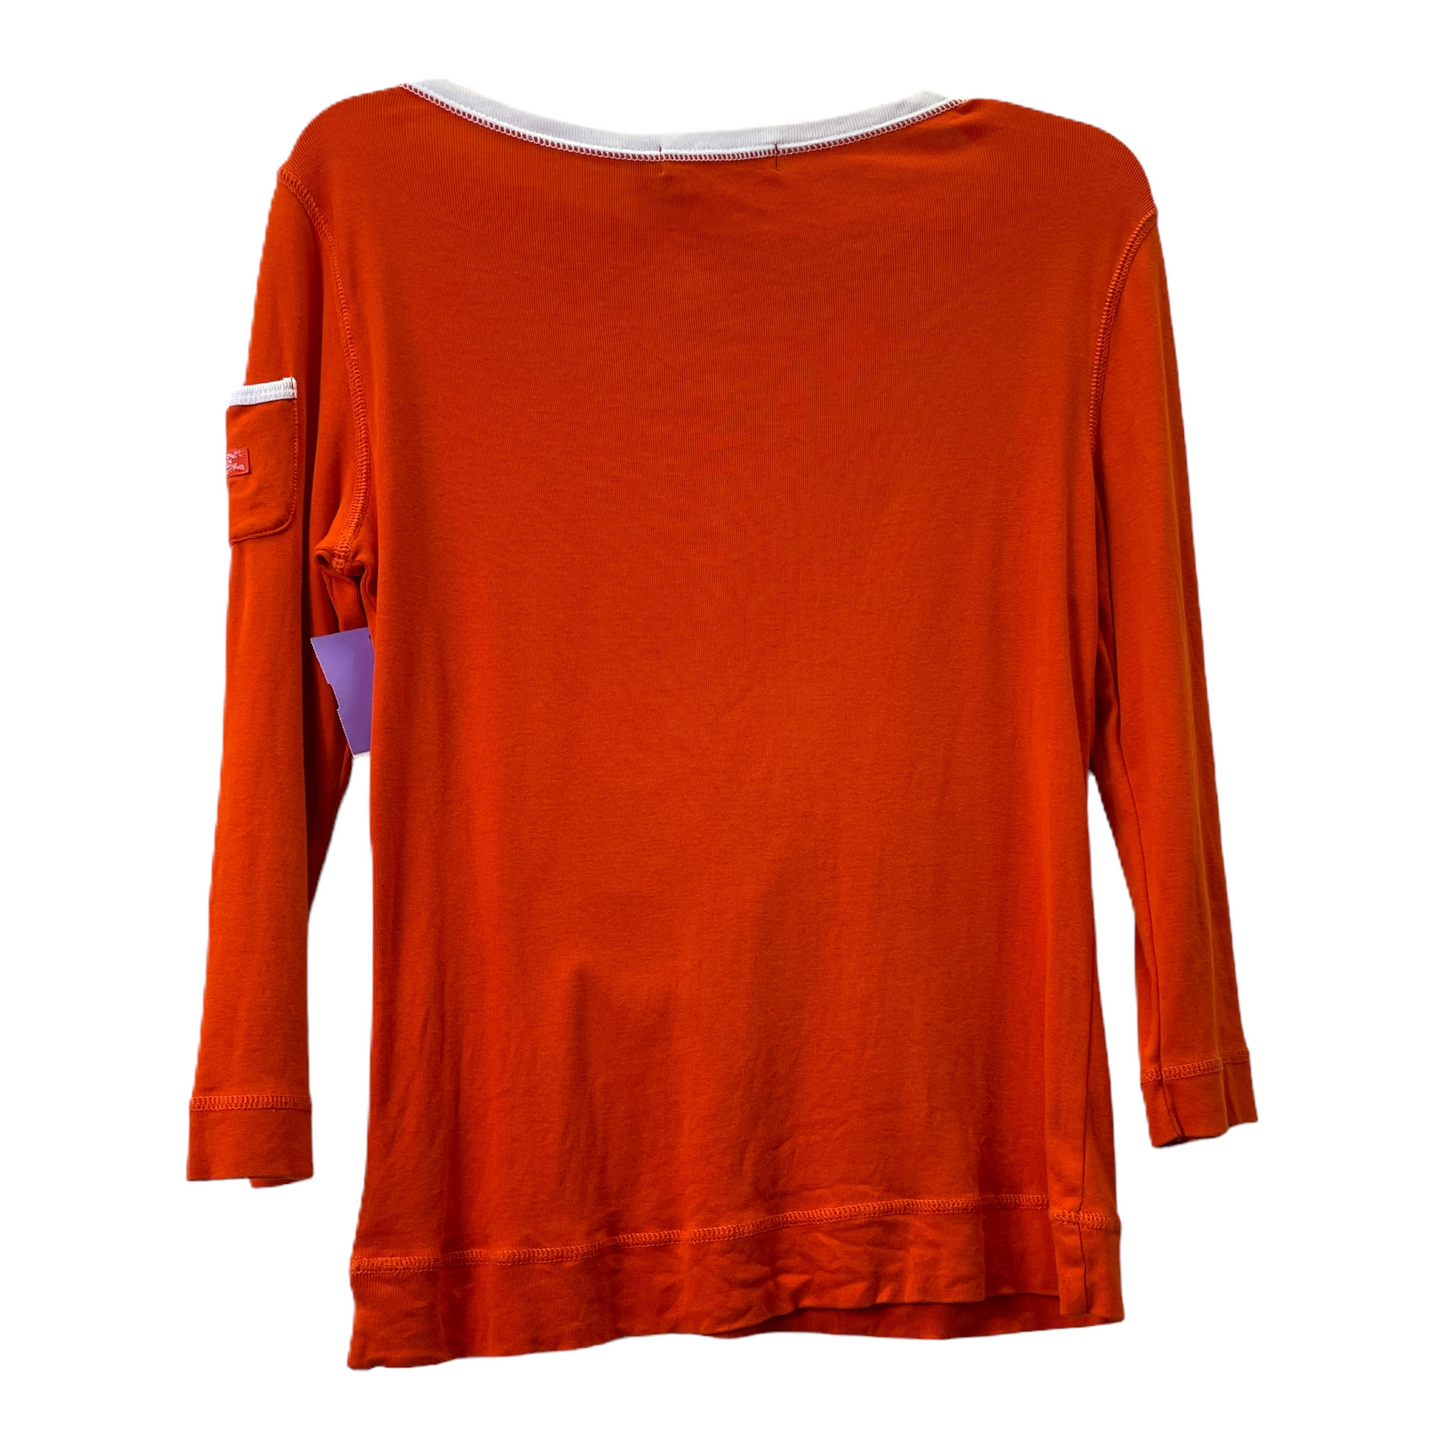 Orange Top Long Sleeve Basic By Ralph Lauren, Size: M